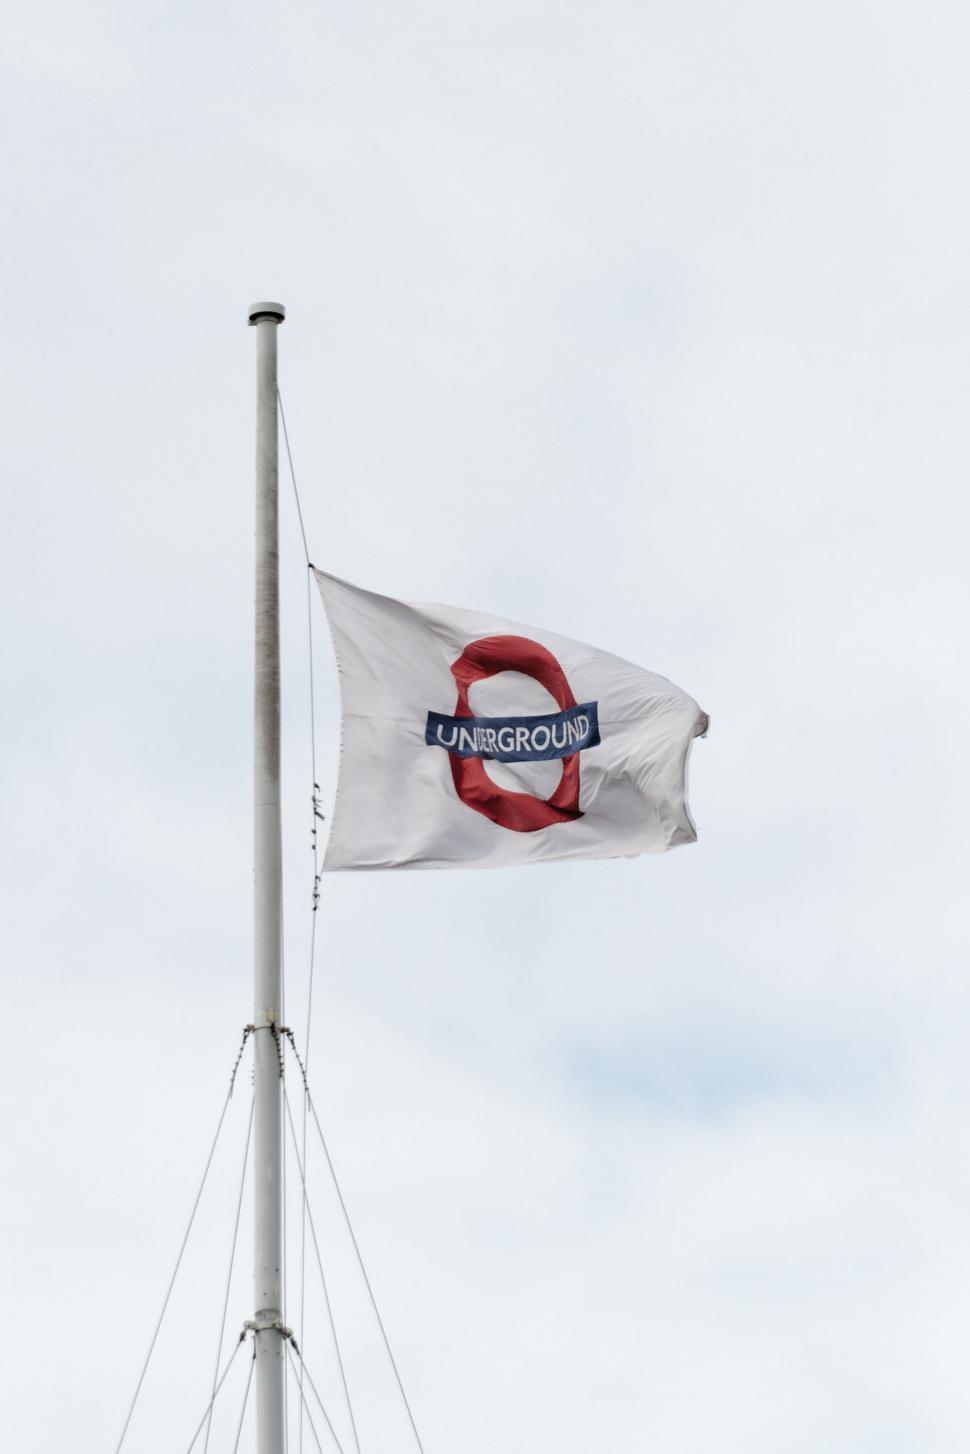 Free Image of British subway system flag 